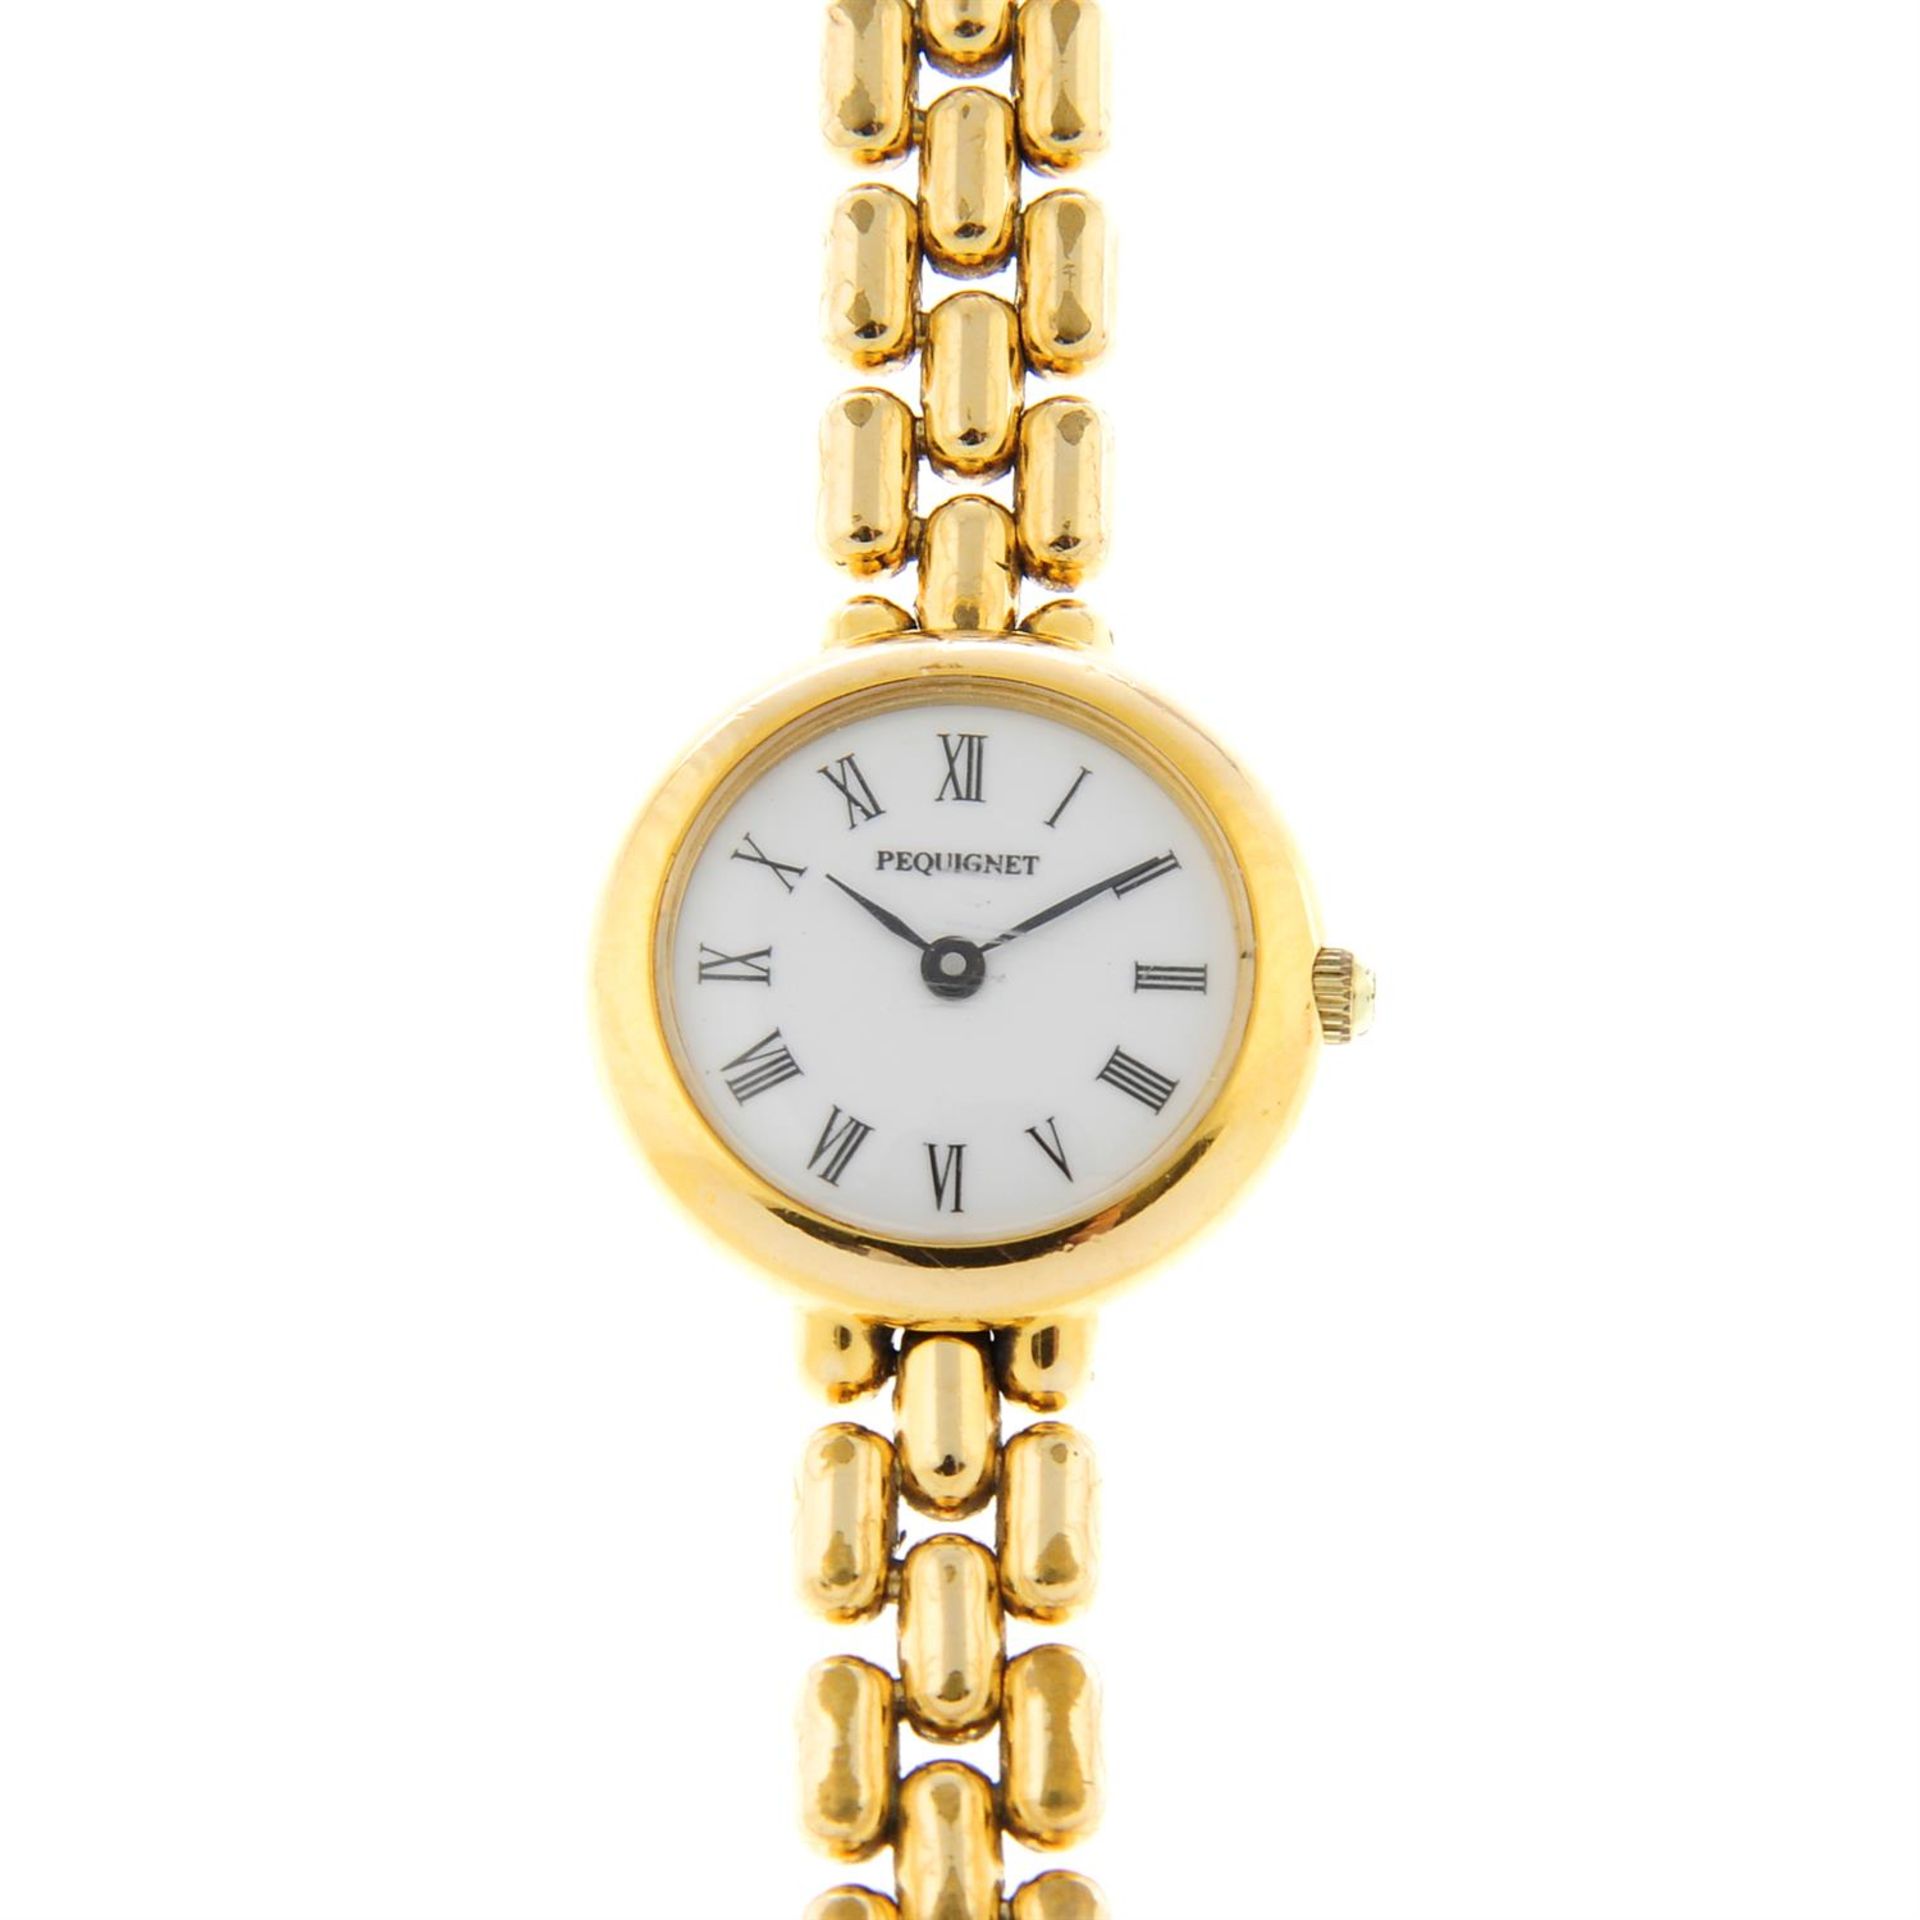 LONGINES - a 9ct yellow gold wrist watch (32.5mm) with a Pequignet bracelet watch. - Bild 5 aus 6